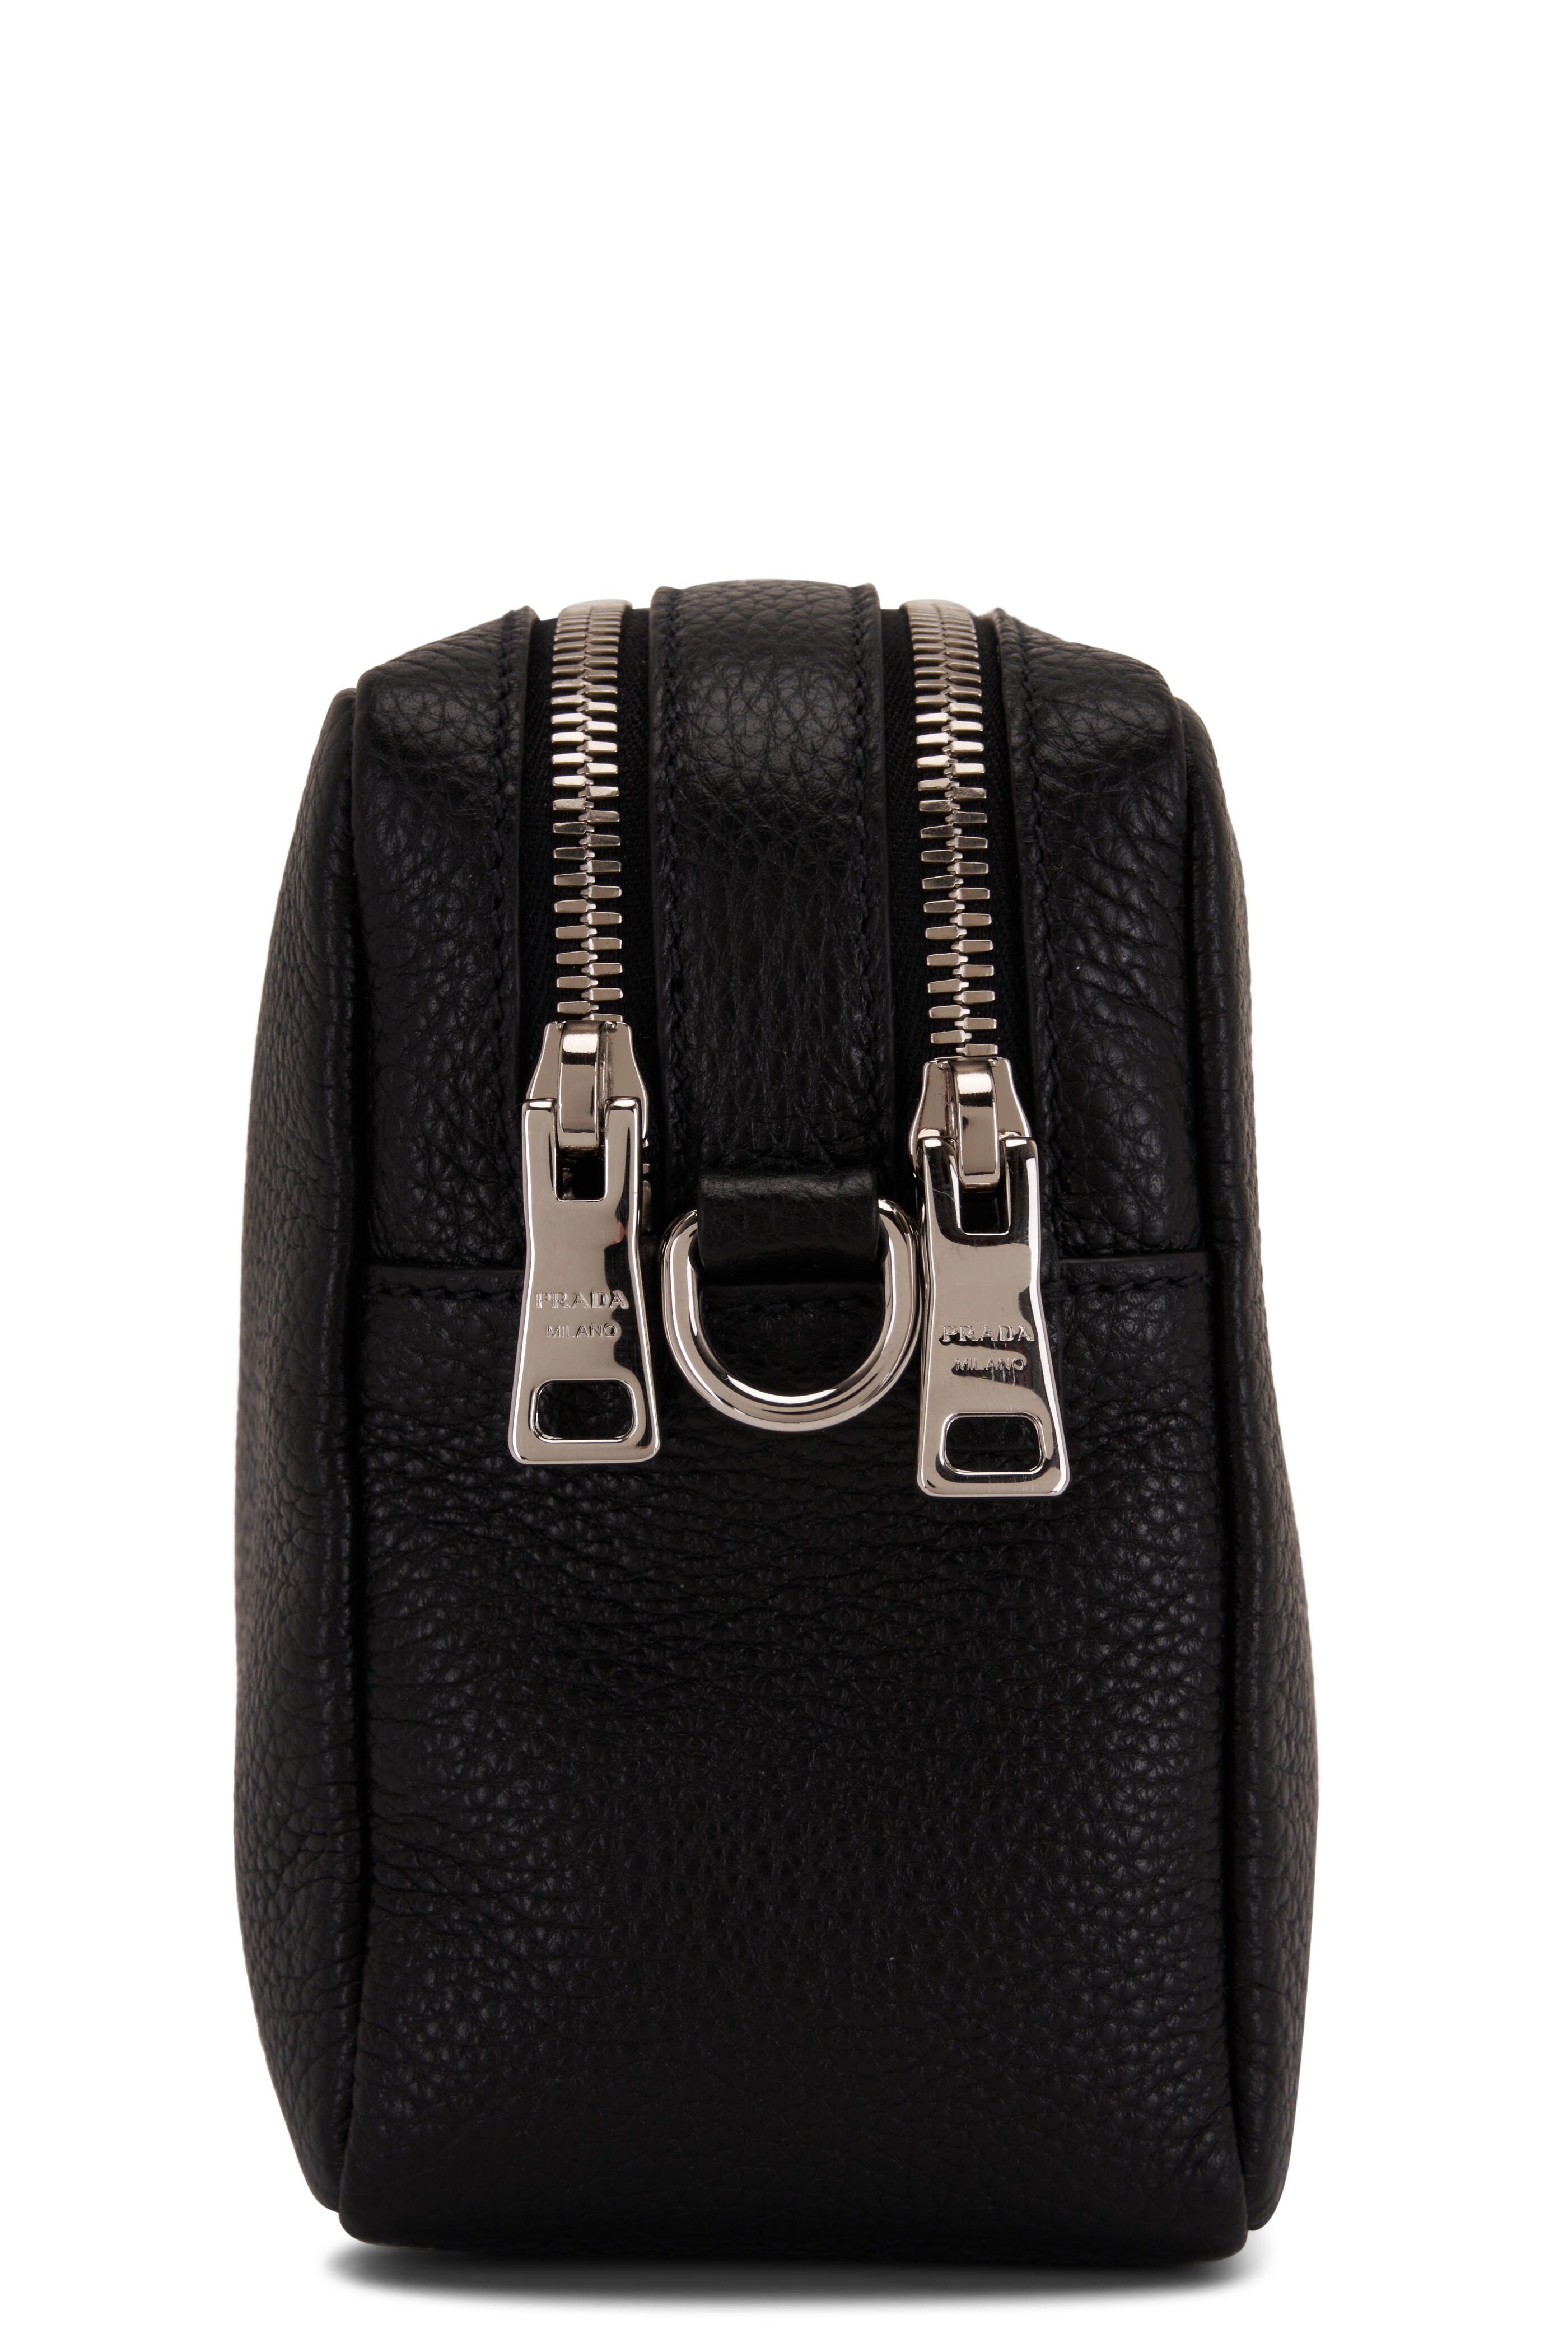 Prada Black Nylon Dual-Compartment Crossbody Bag, Best Price and Reviews